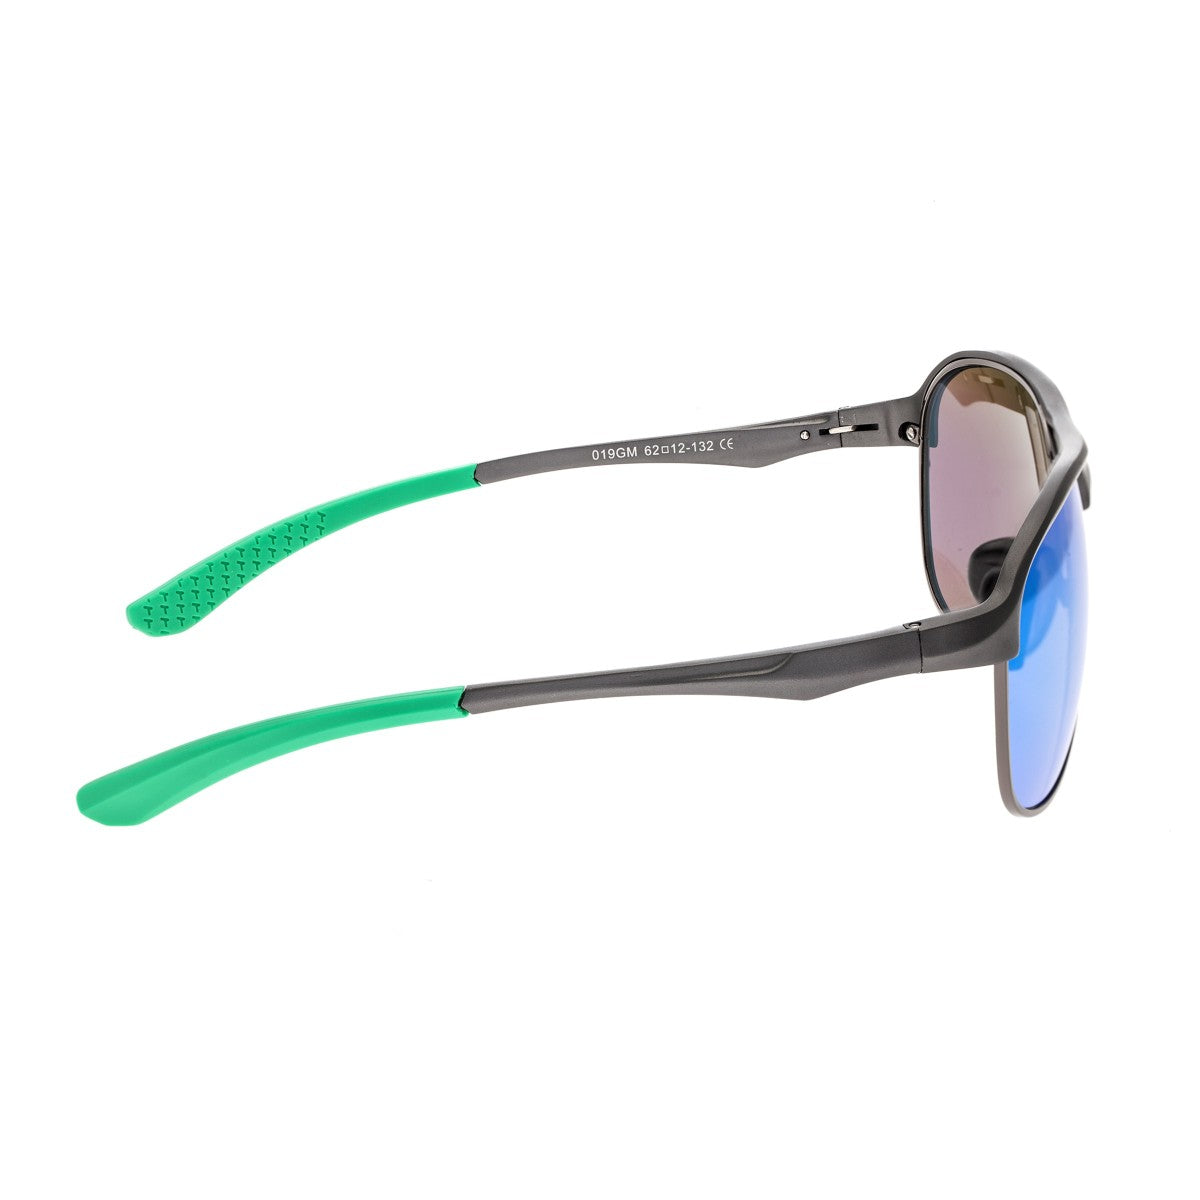 Breed Jupiter Aluminium Polarized Sunglasses - Gunmetal/Blue-Green - BSG019GM